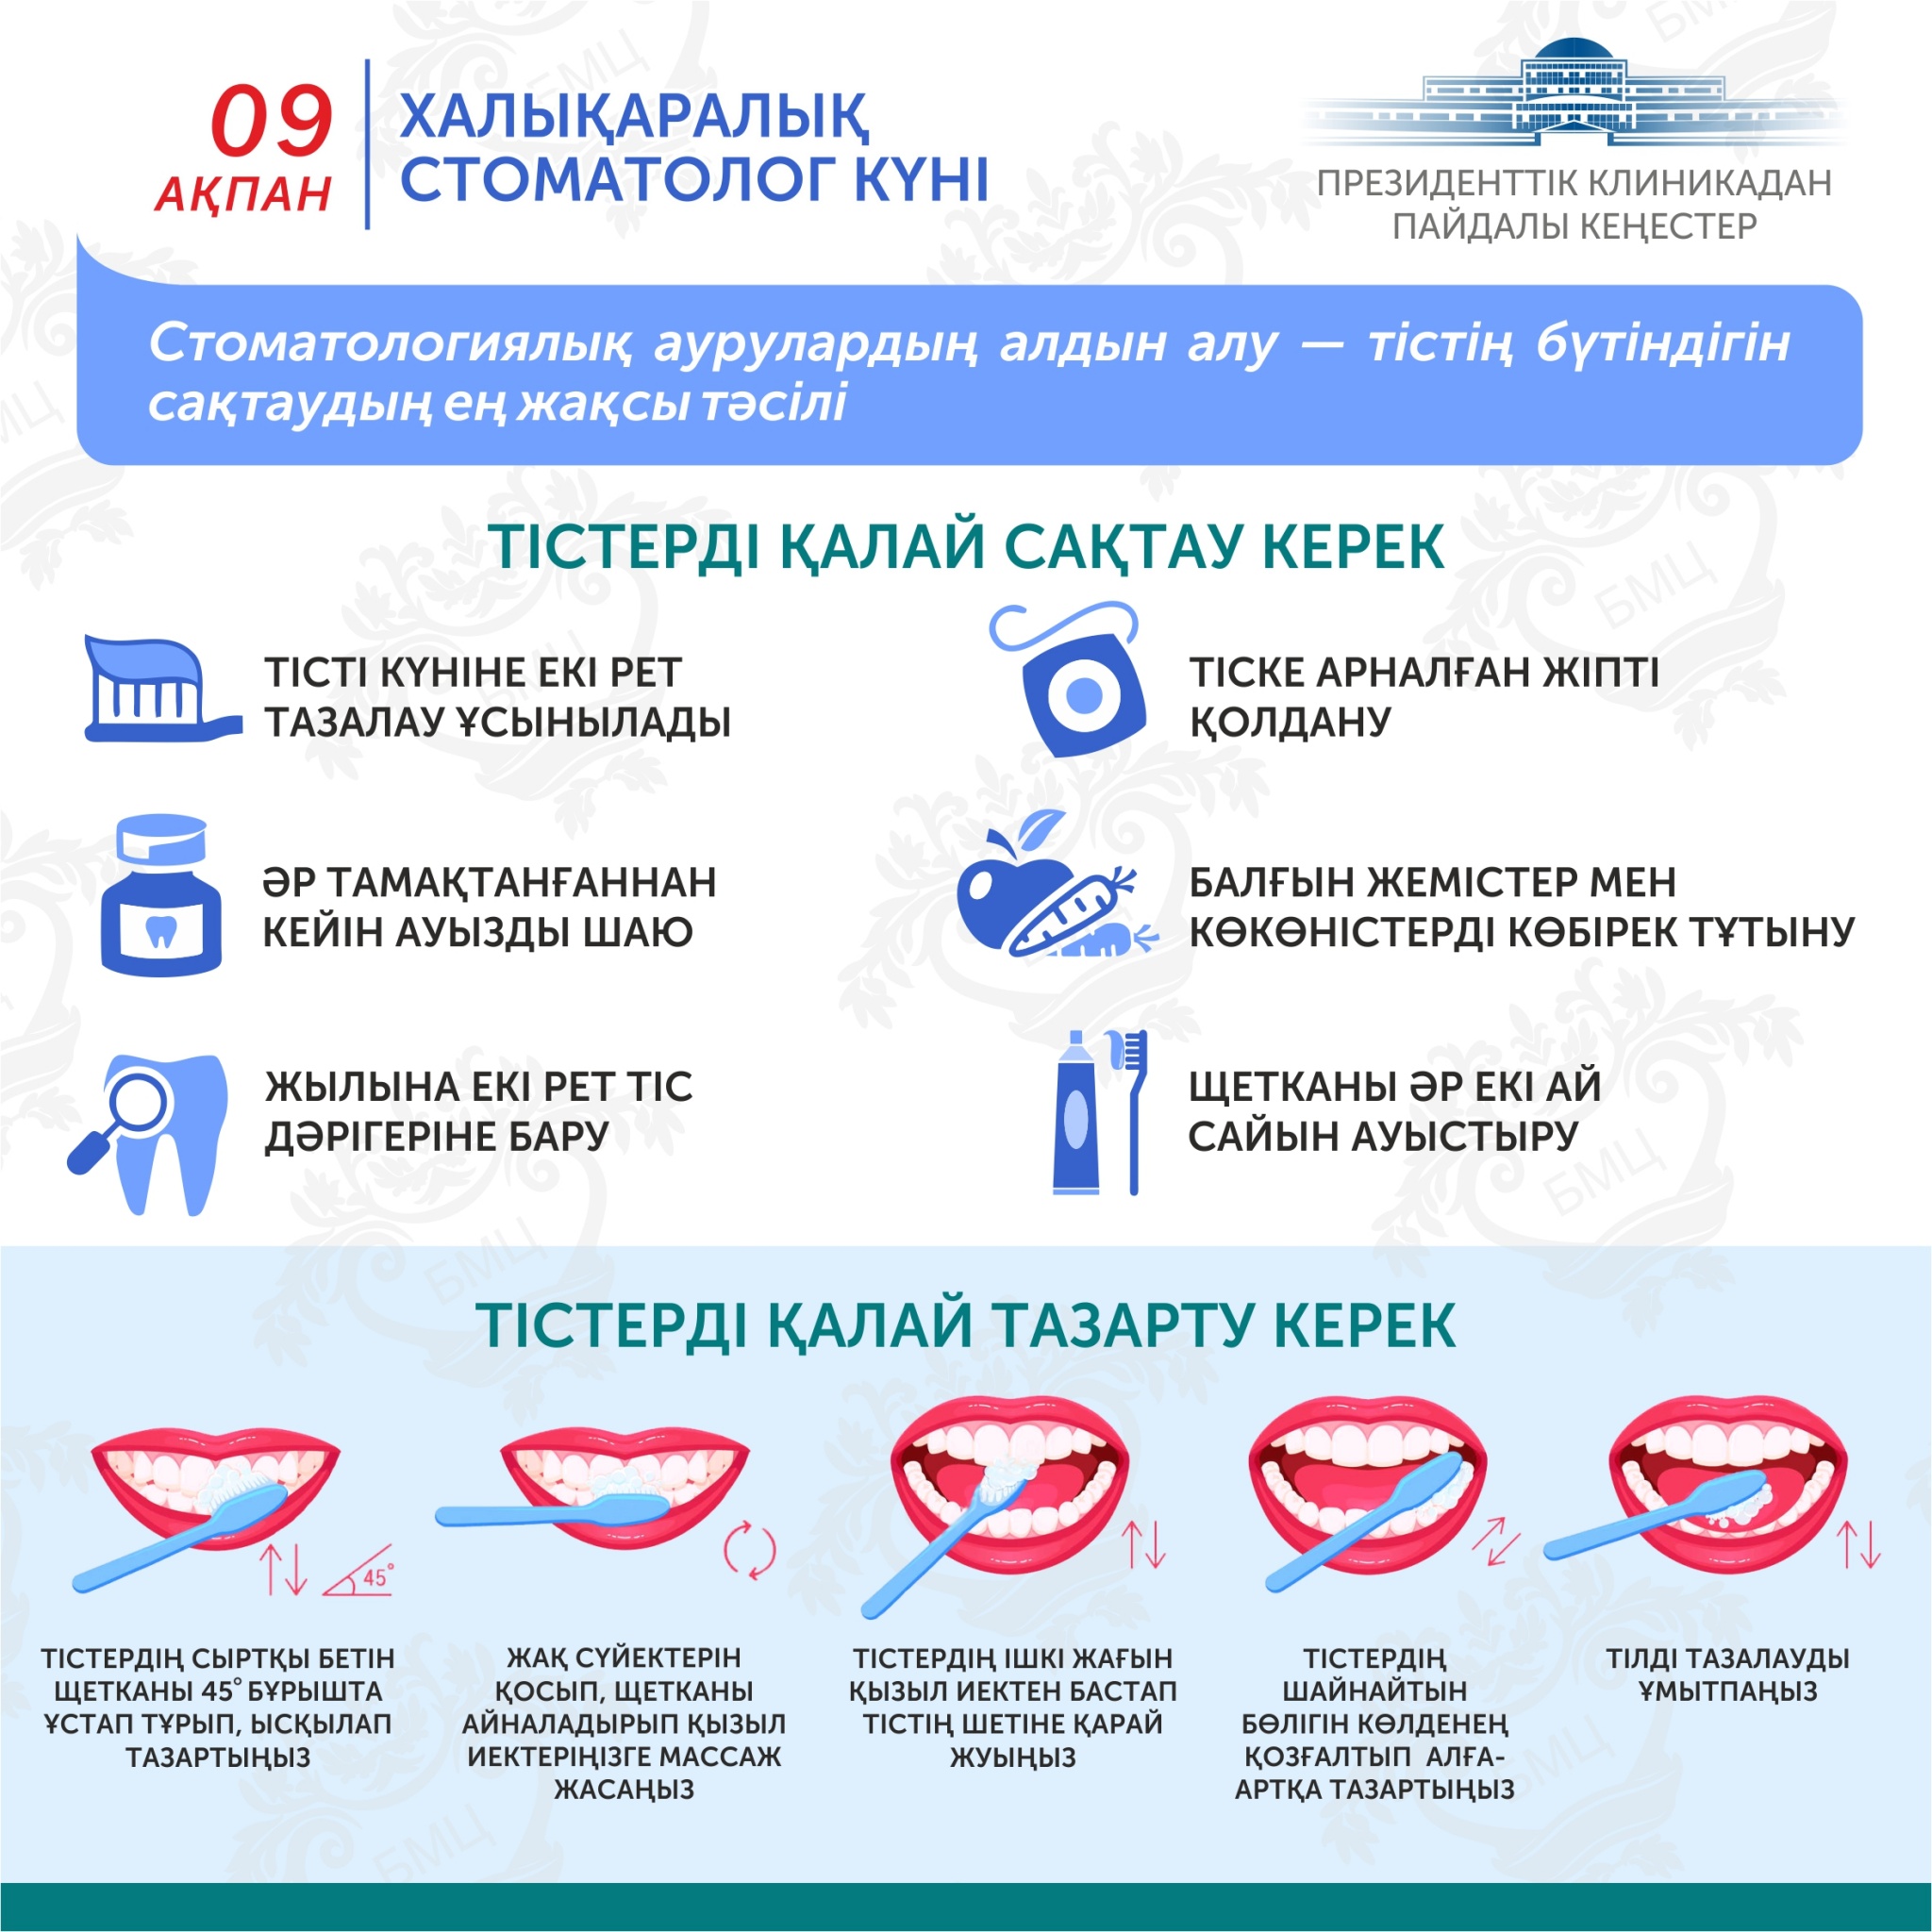 Международный день стоматолога (каз).jpg